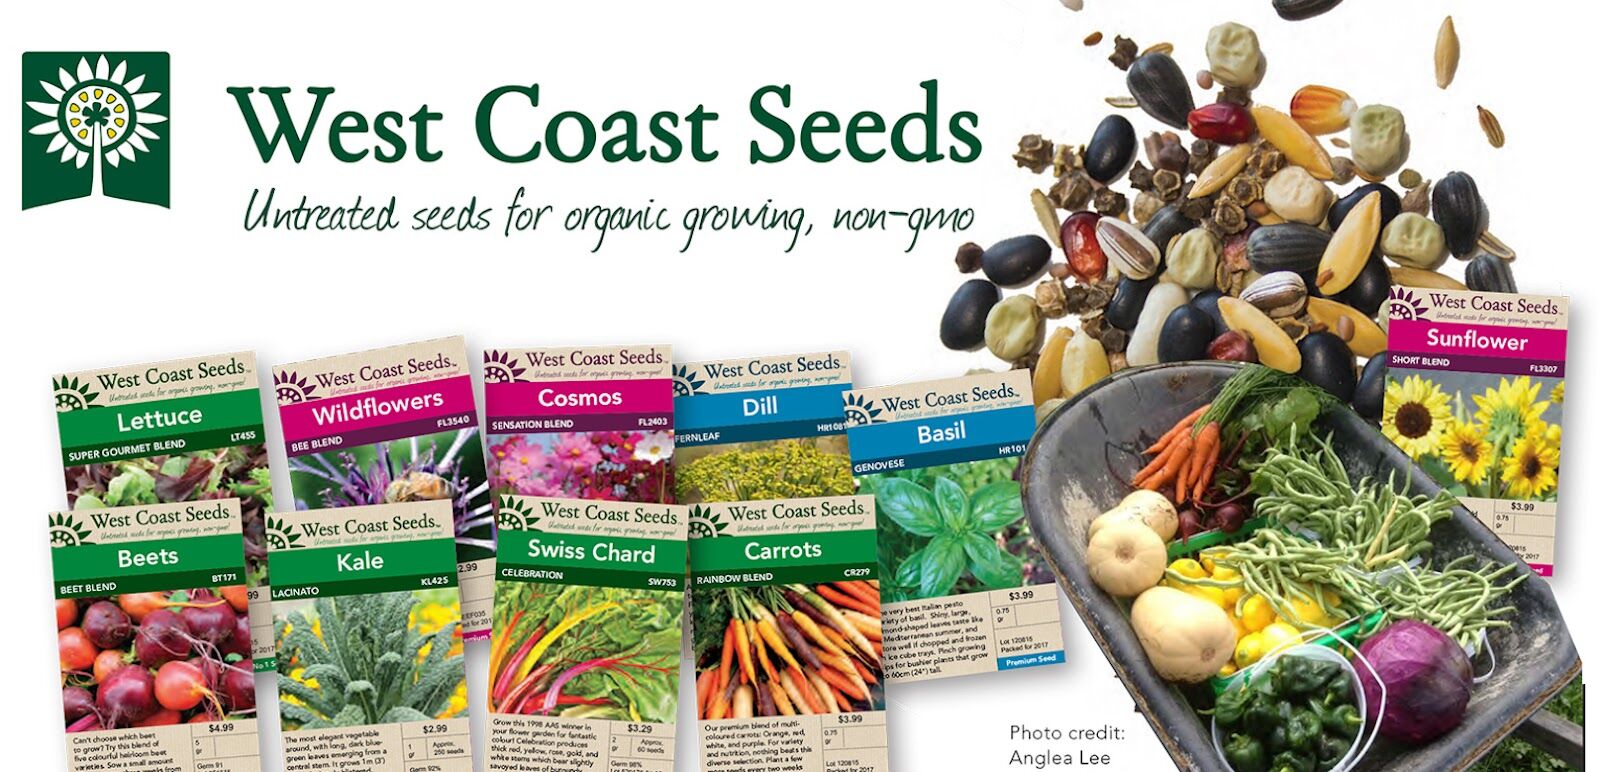 FR: West Coast Seeds image